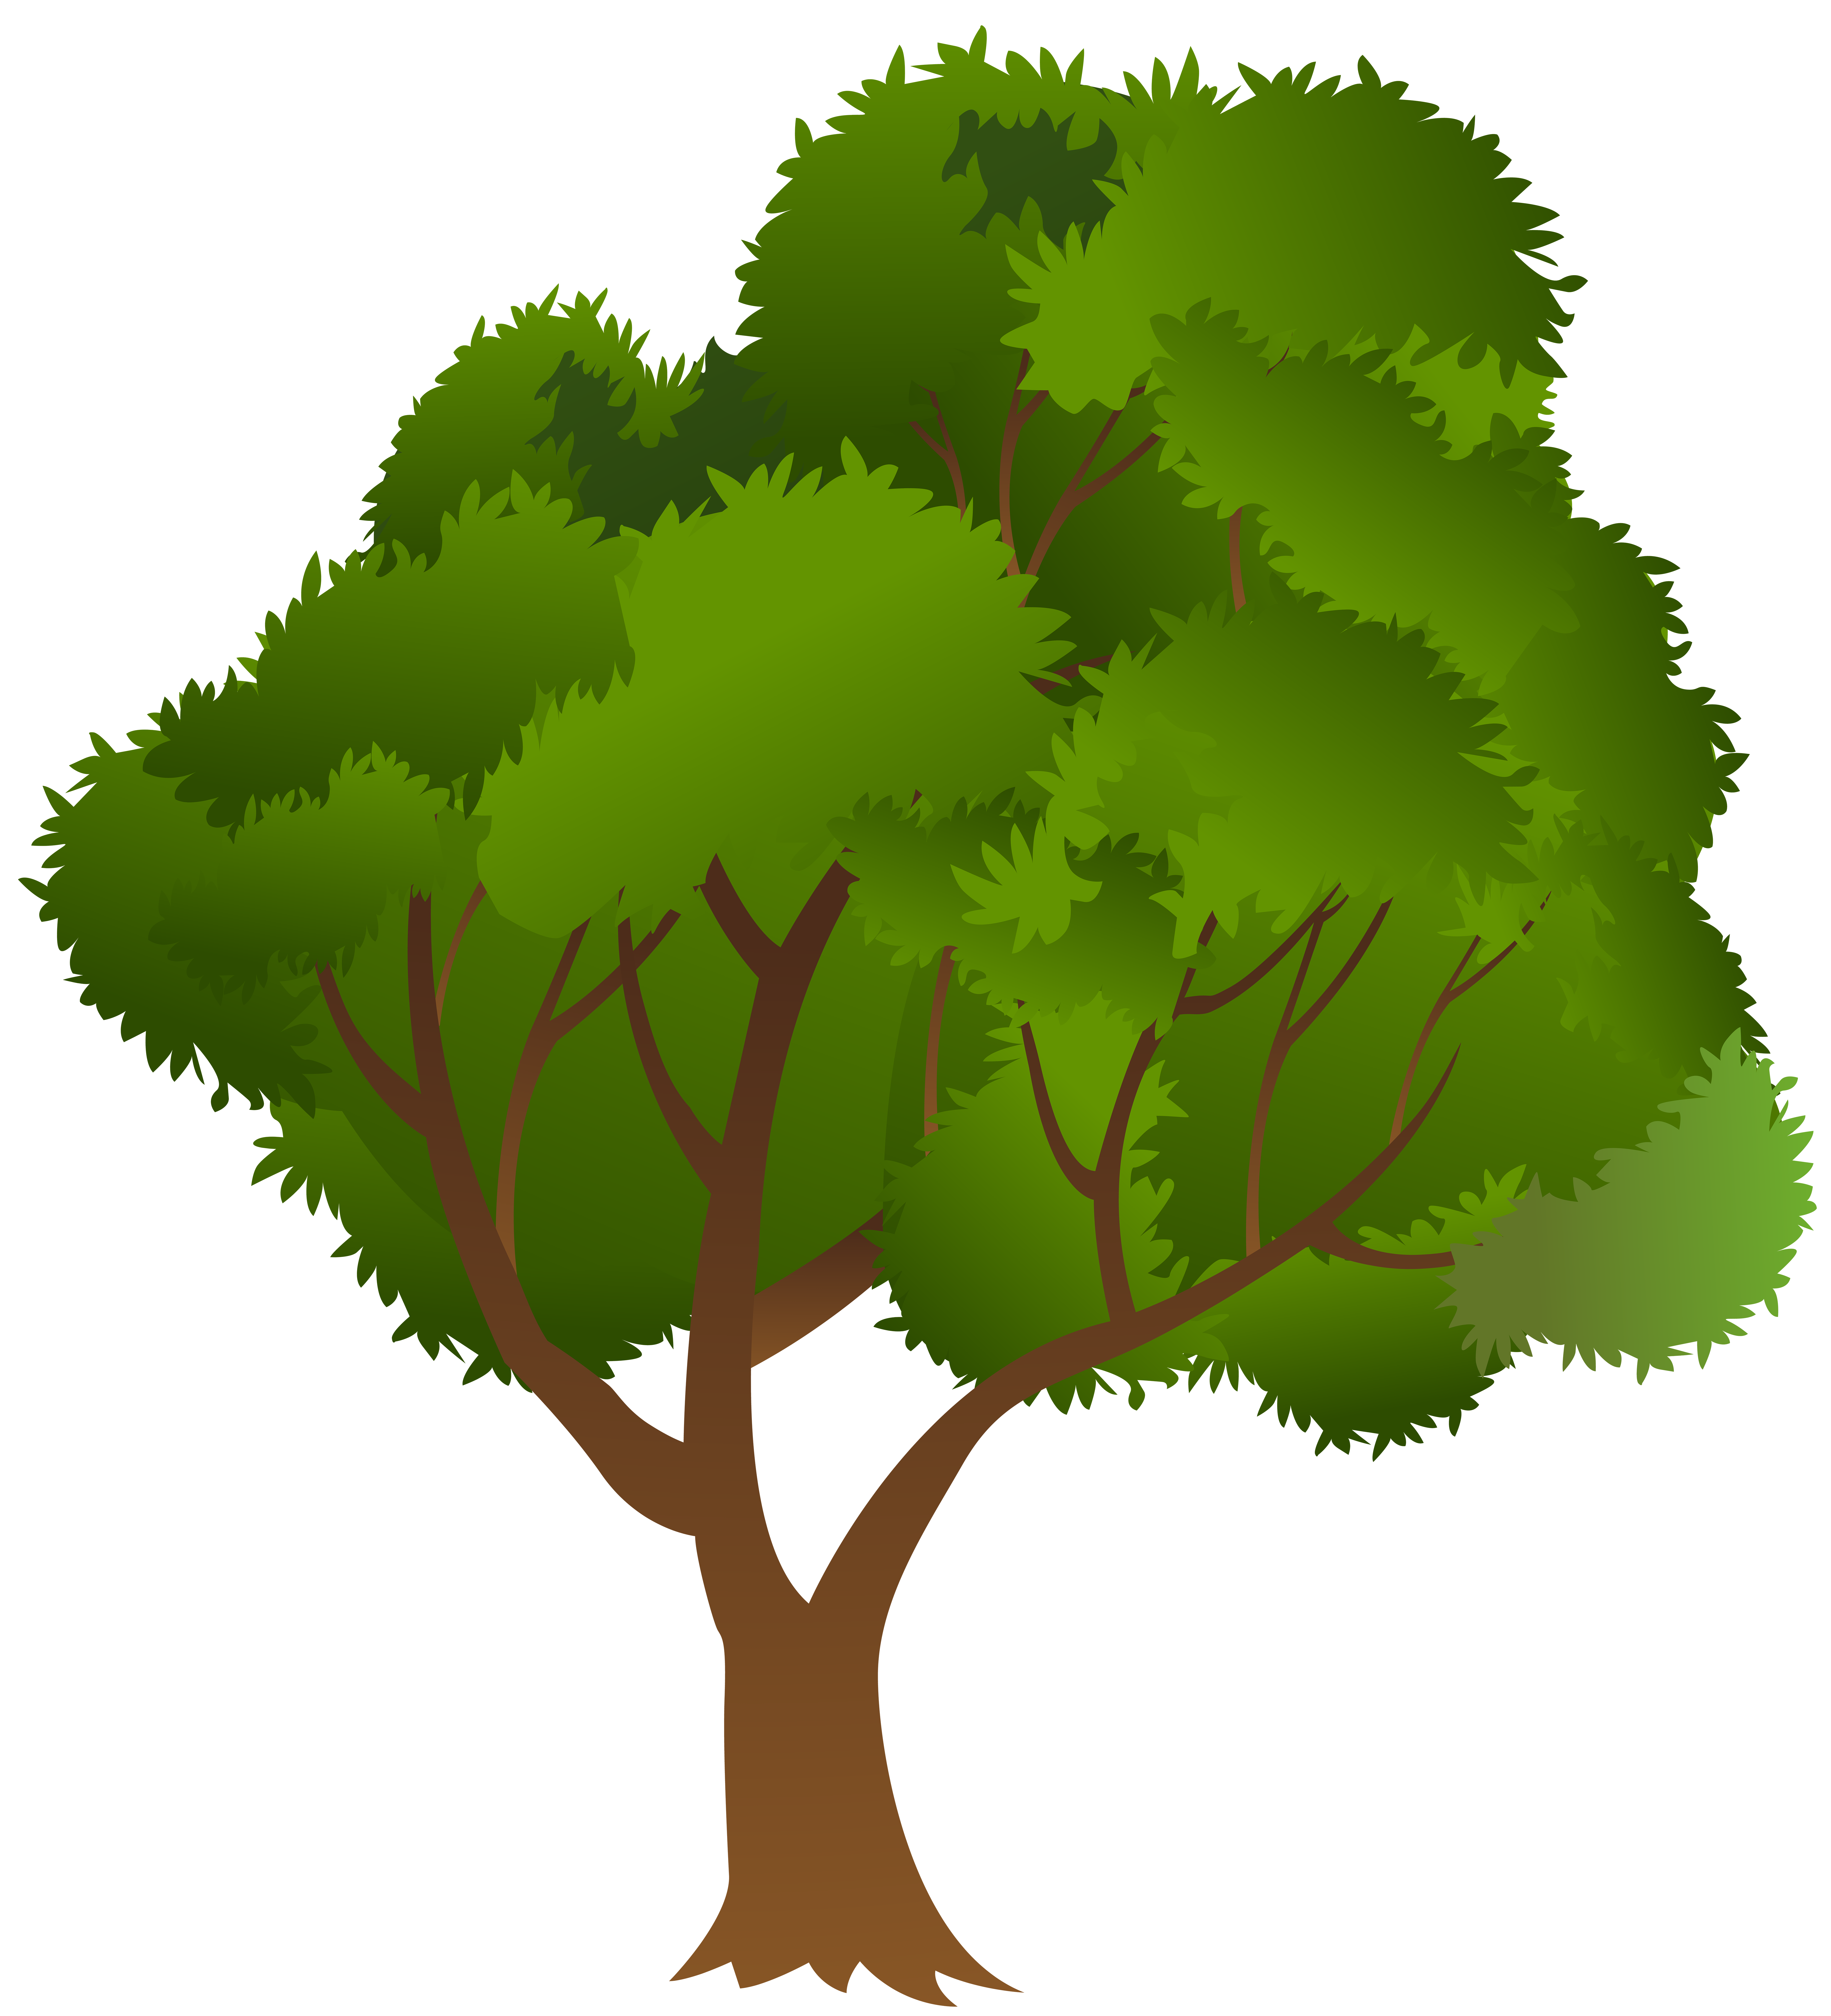 Tree PNG Clip Art Image